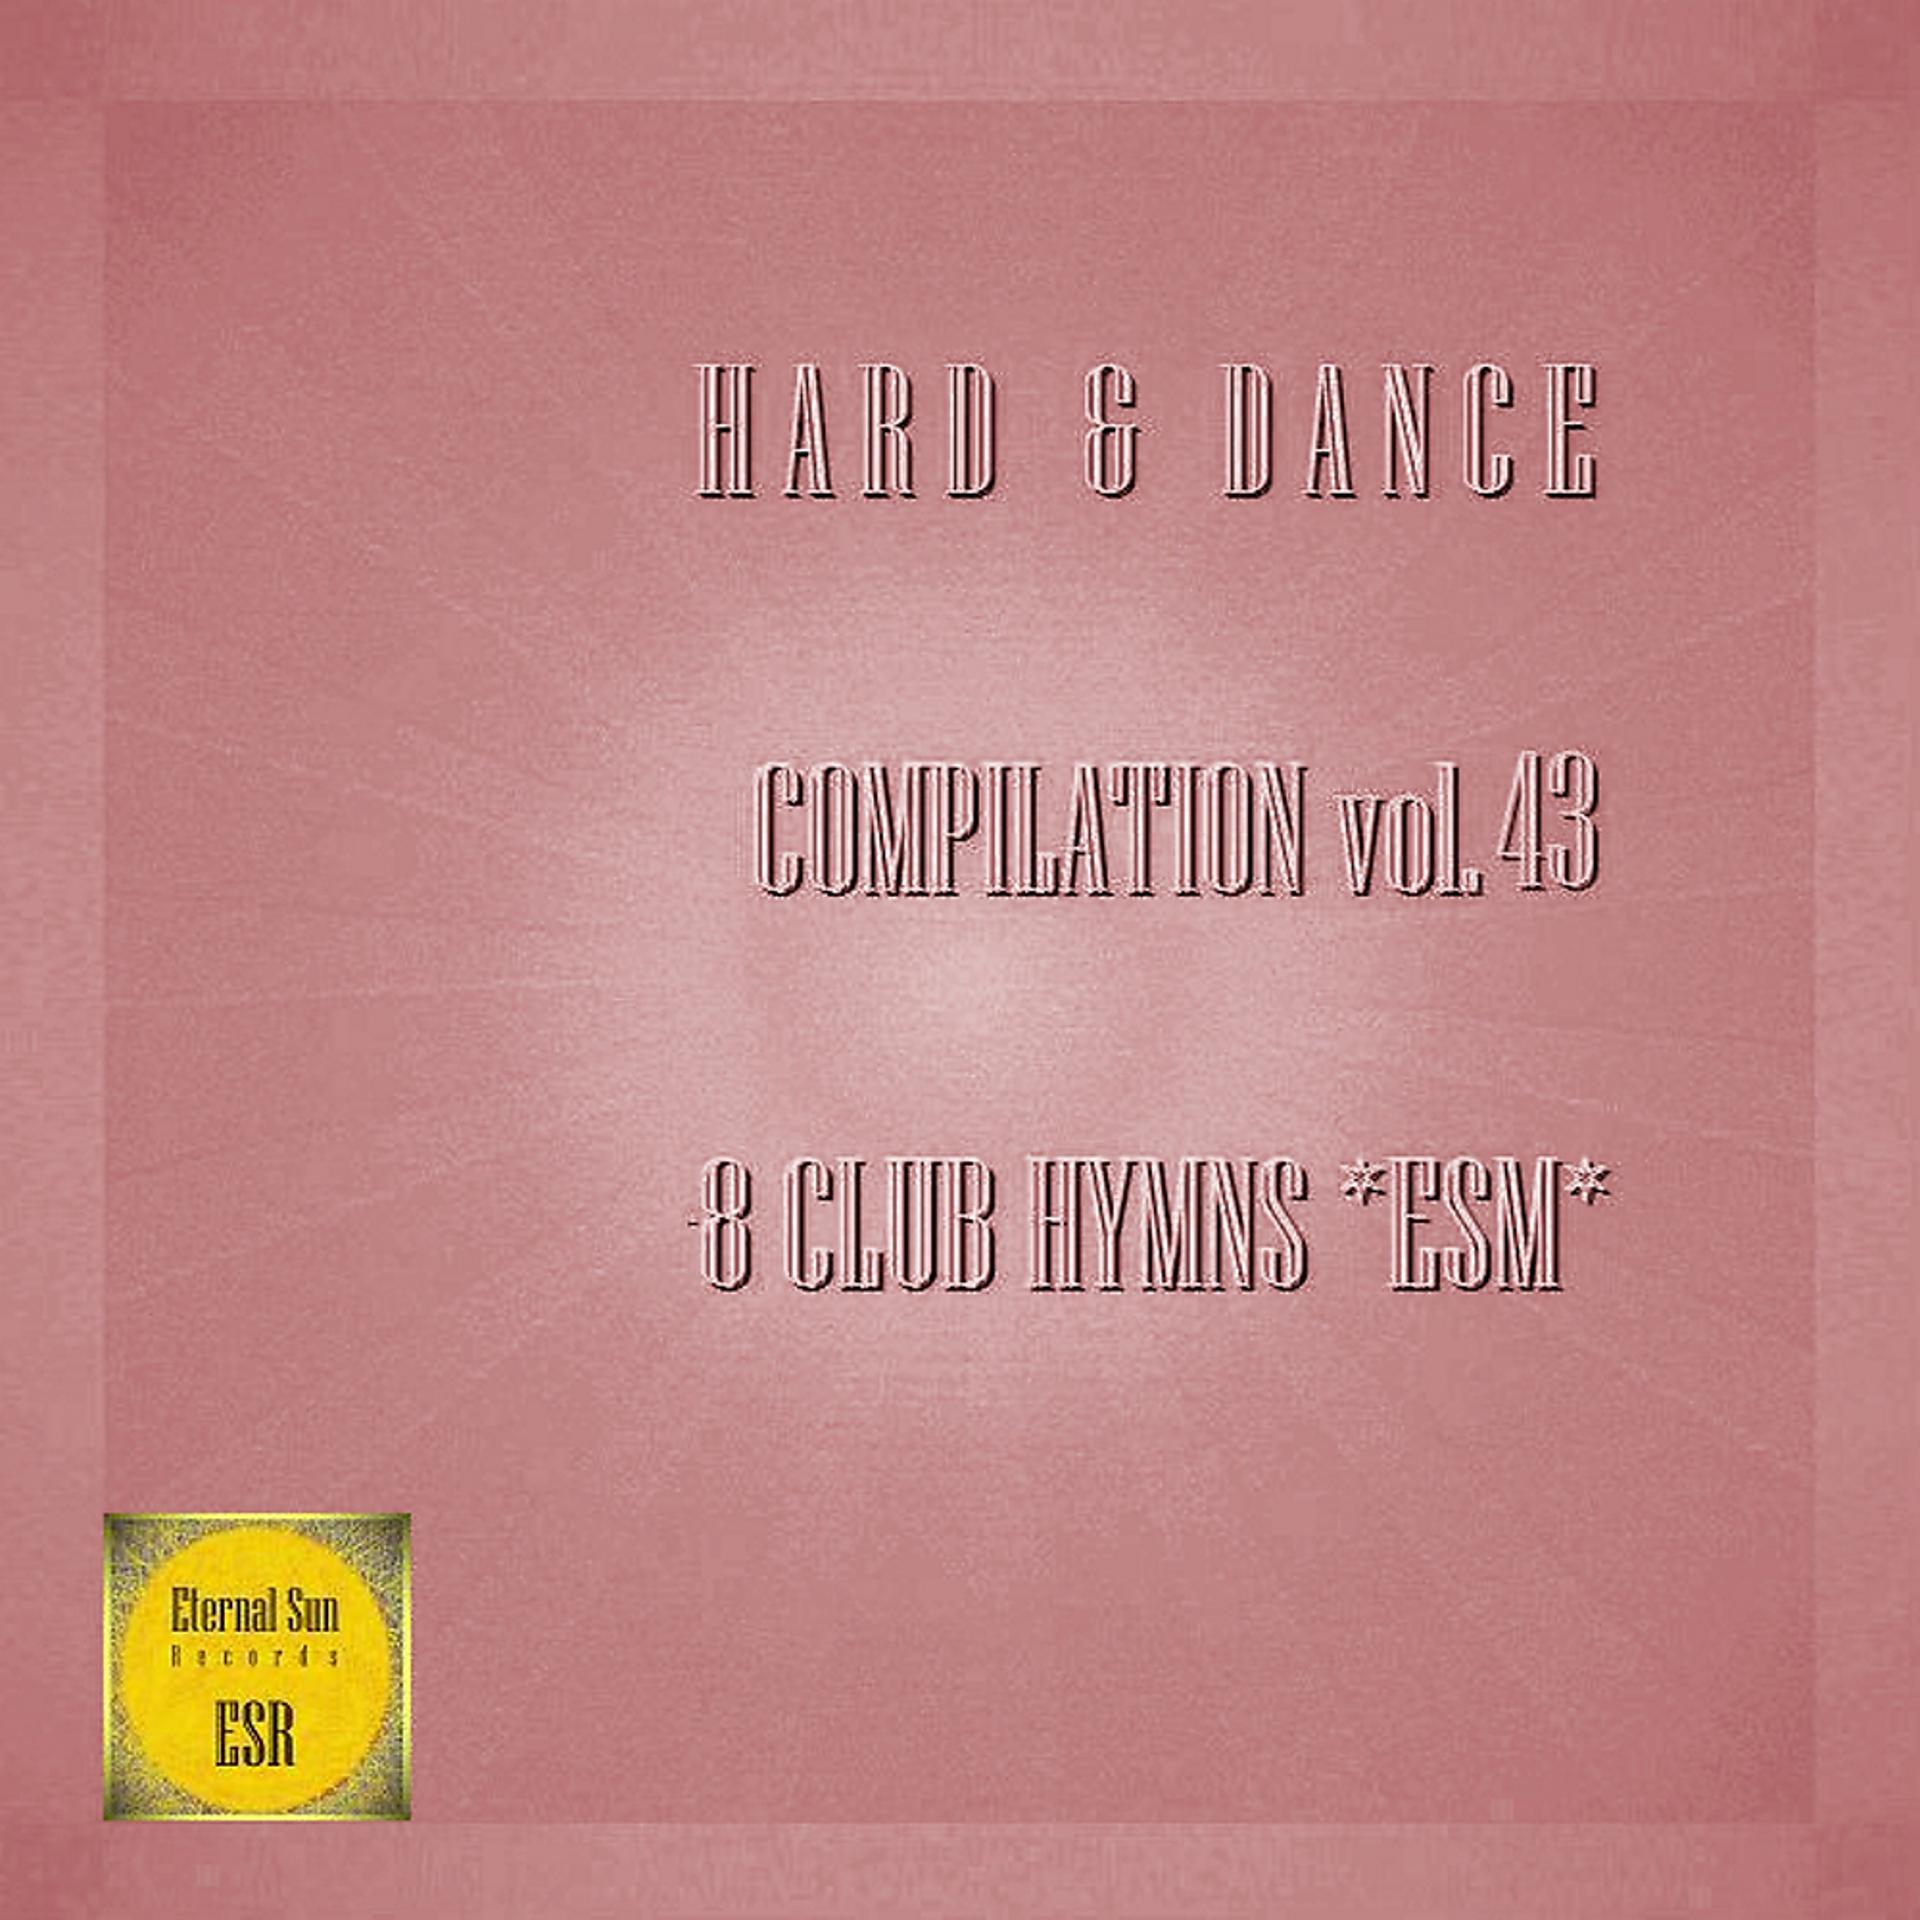 Постер альбома Hard & Dance Compilation, Vol. 43 - 8 Club Hymns ESM